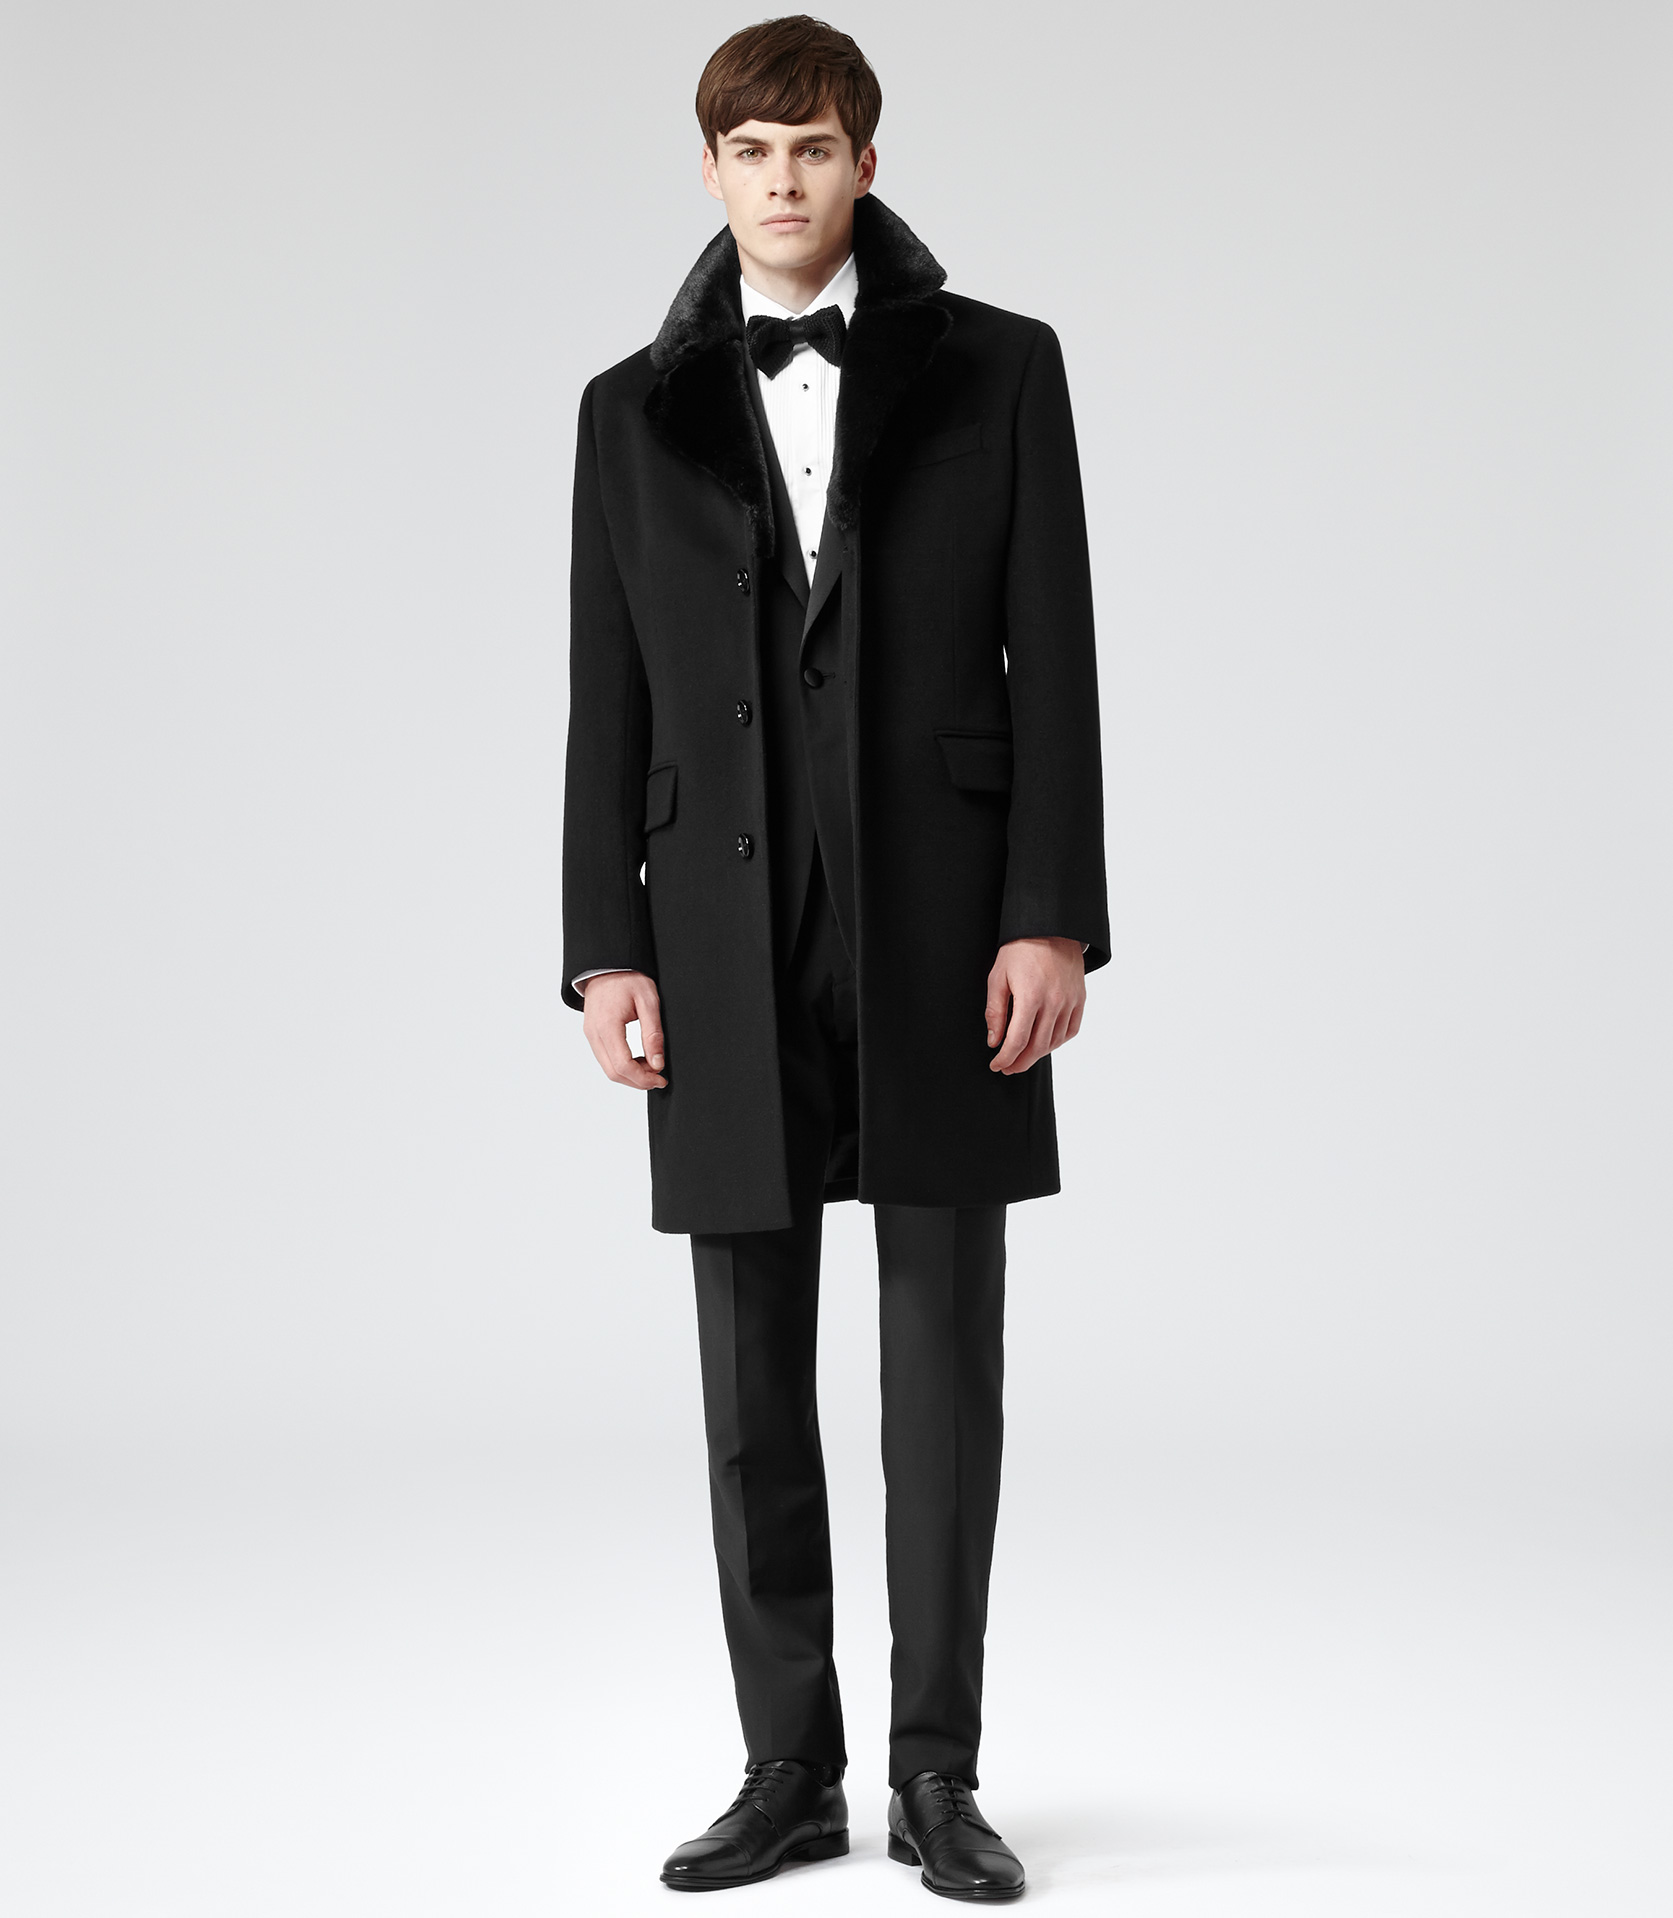 Lyst - Reiss King Faux Fur Collar Coat in Black for Men